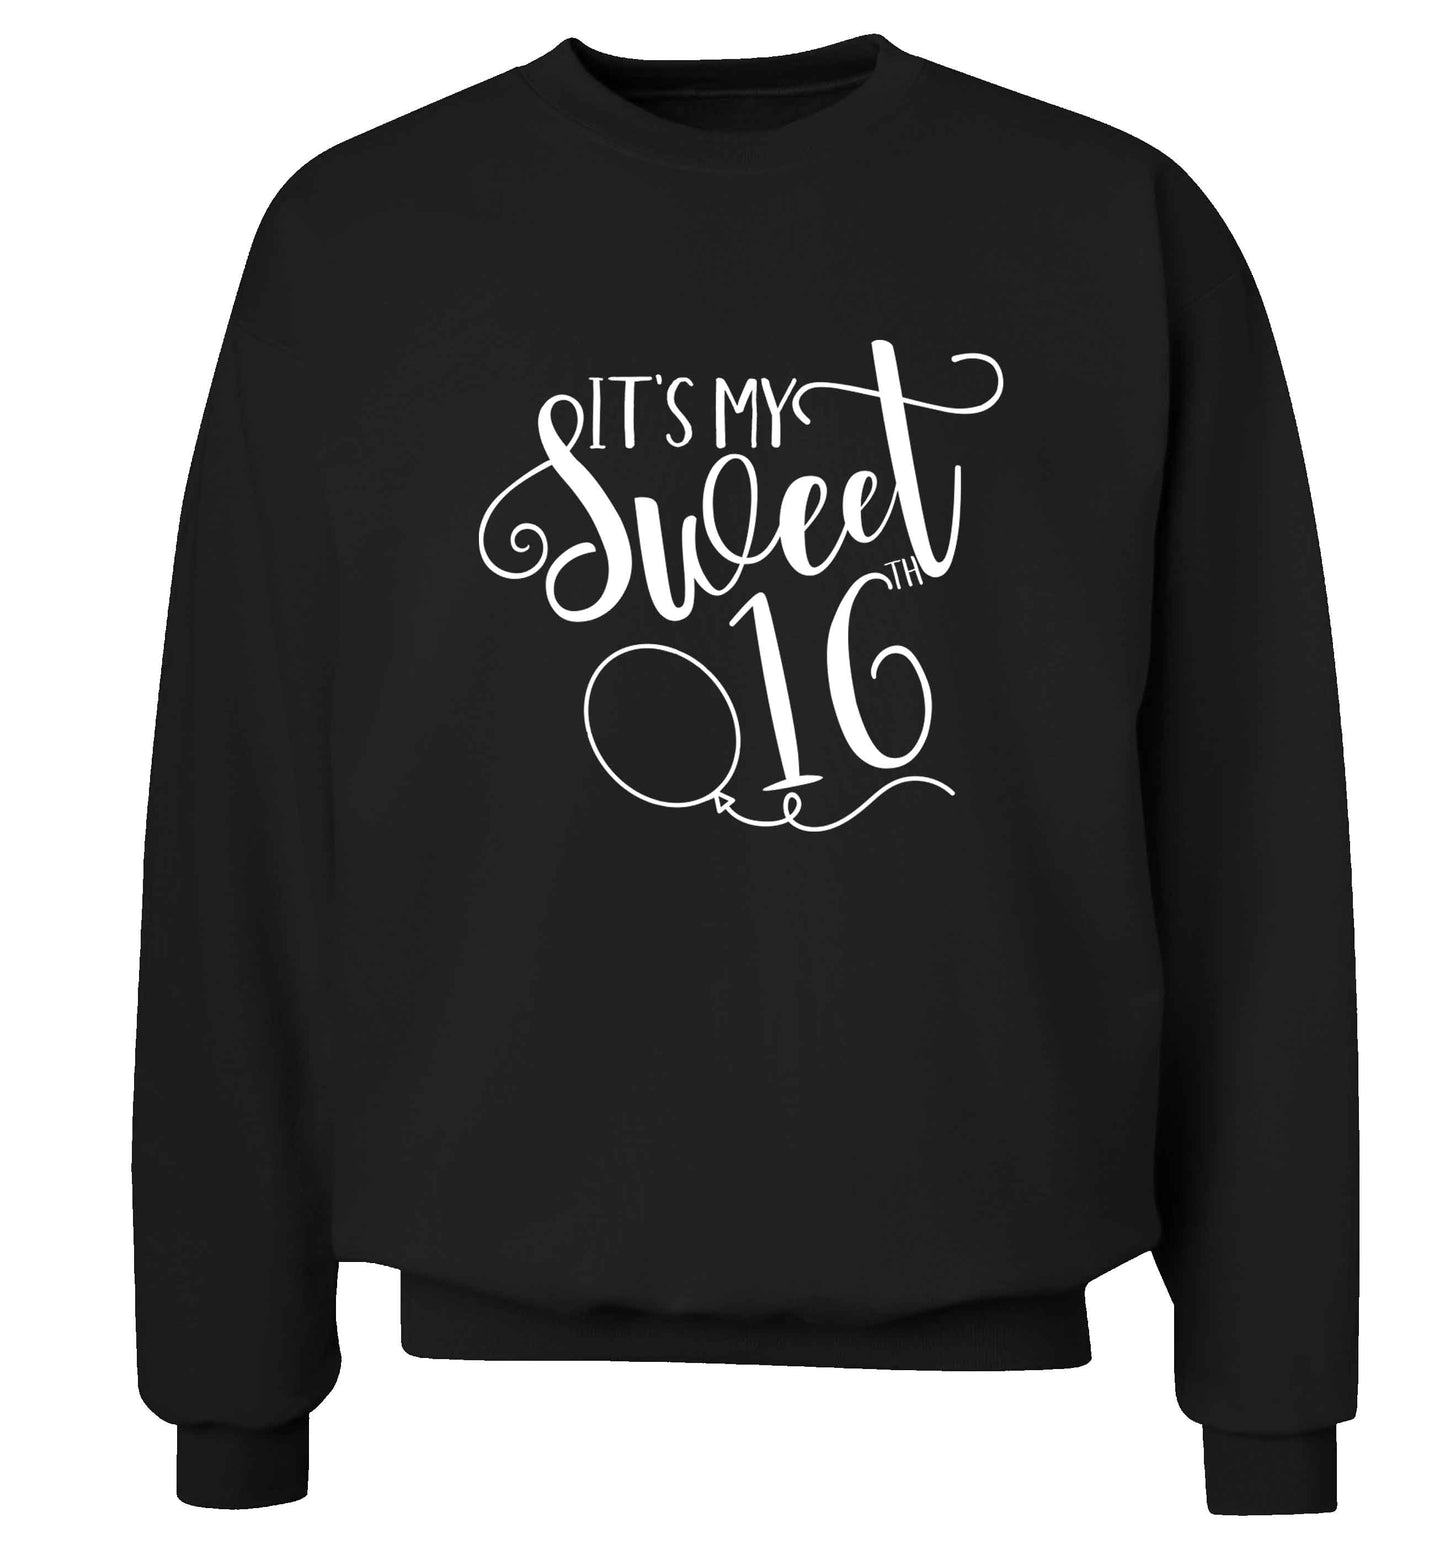 It's my sweet 16thadult's unisex black sweater 2XL